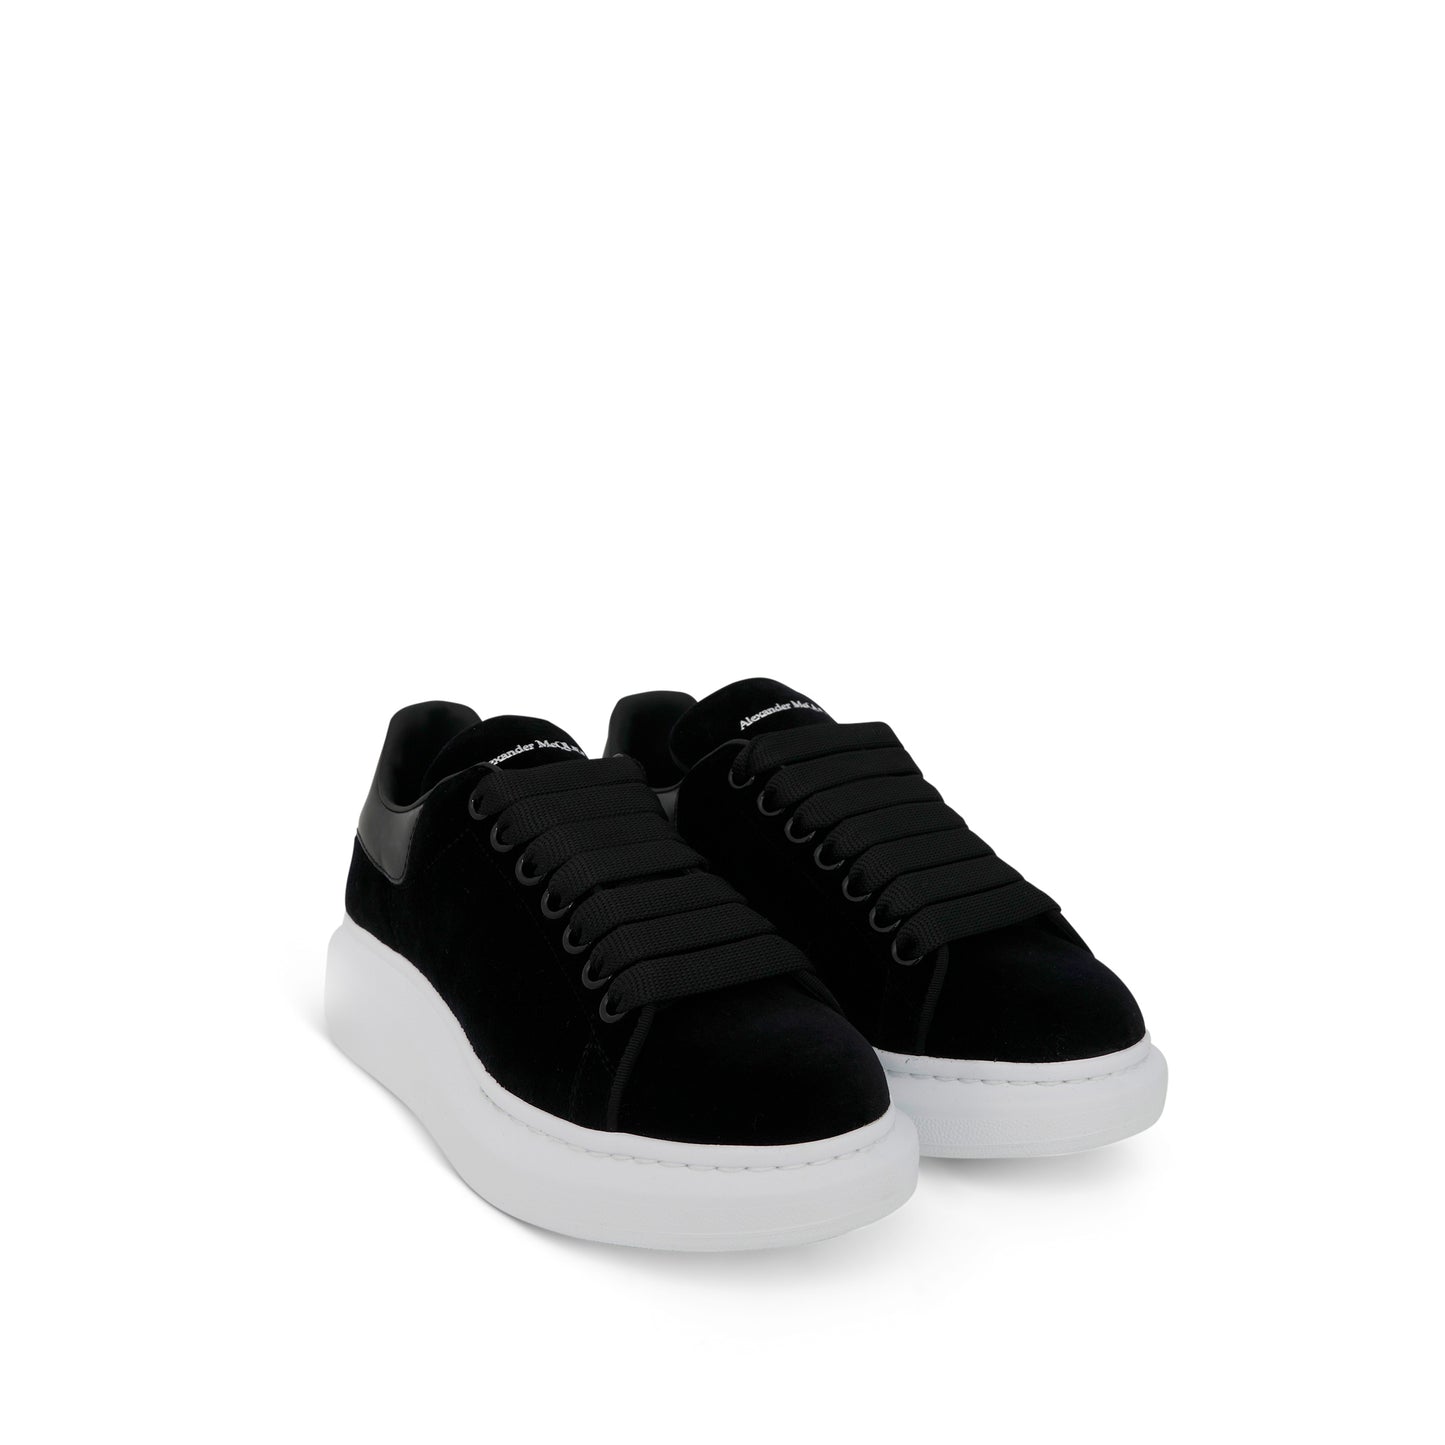 Larry Oversized Heel Sneaker in Black/Black/Black